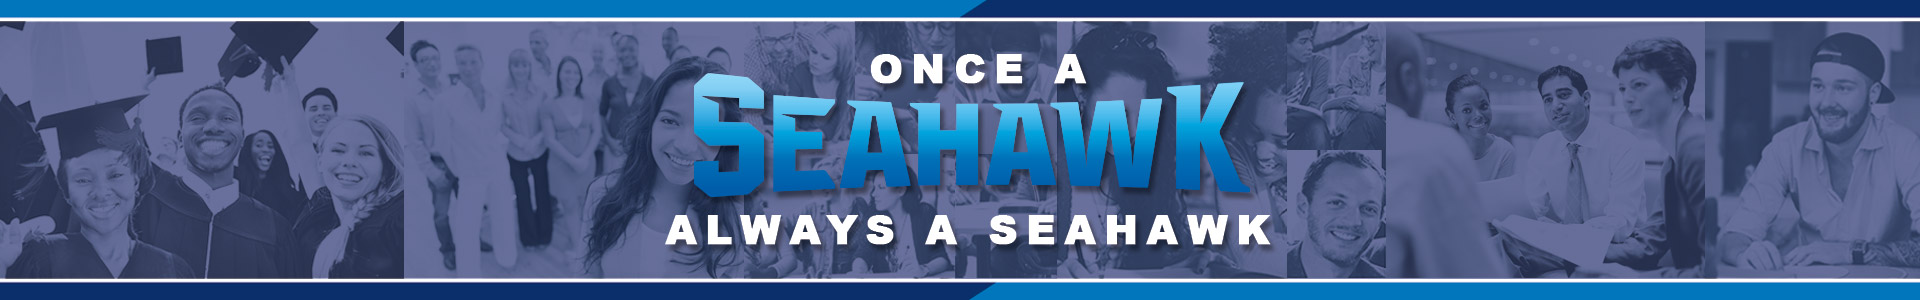 Keiser University Alumni | Once a Seahawk Always a Seahawk